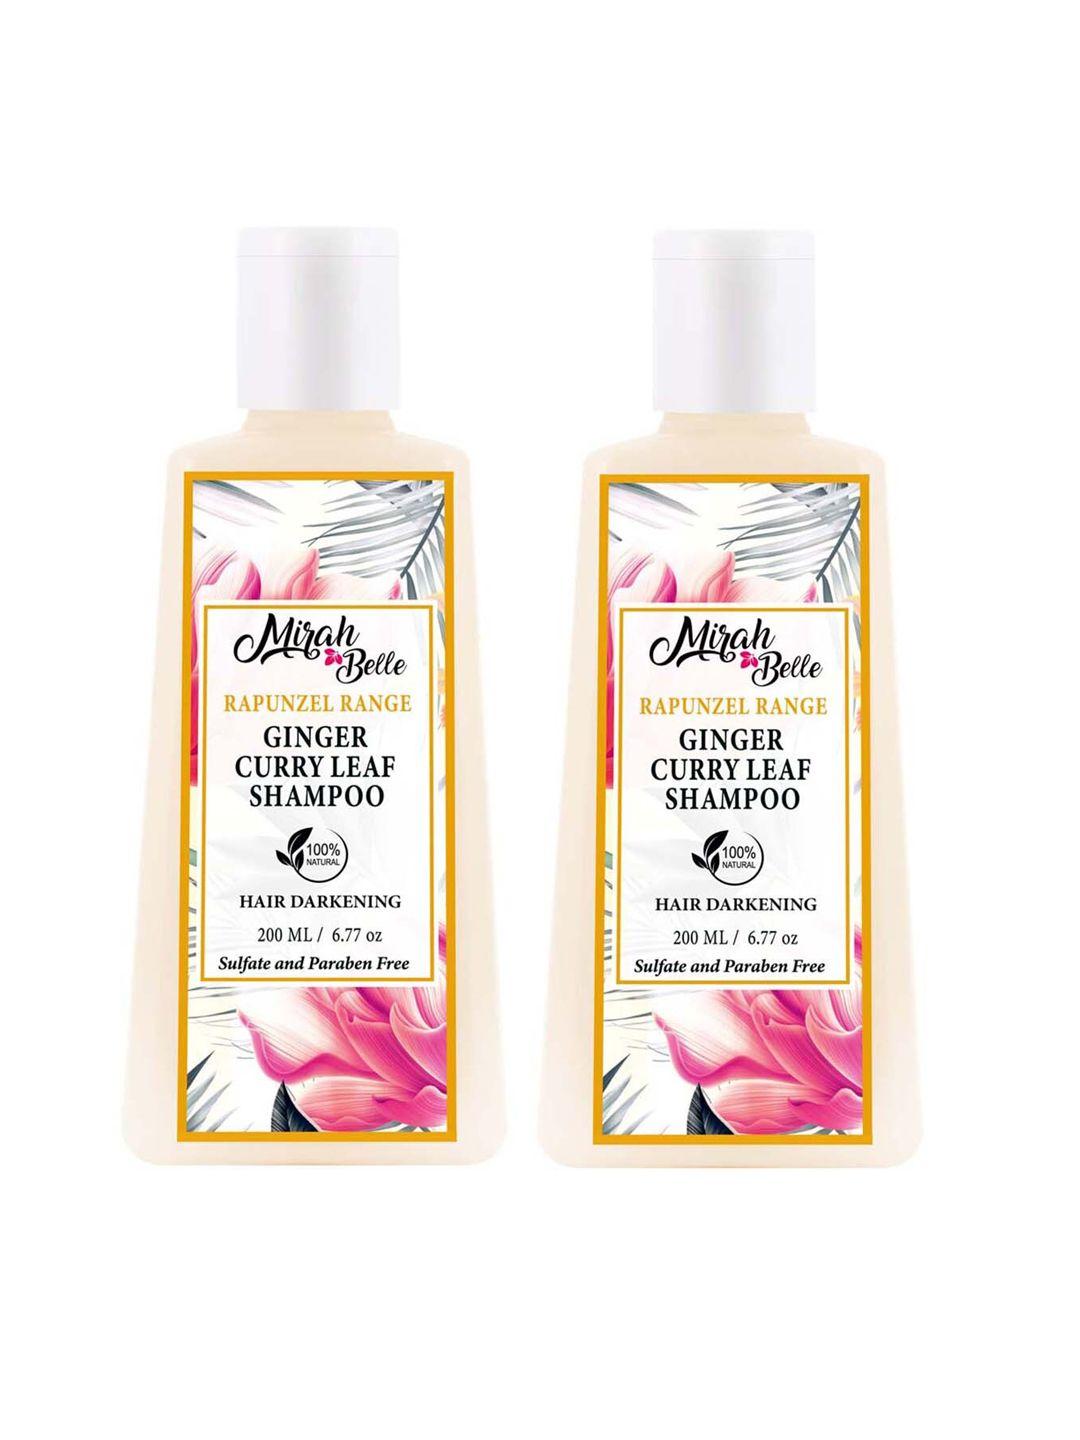 mirah belle pack of 2 hair darkening shampoo 200 ml (each)